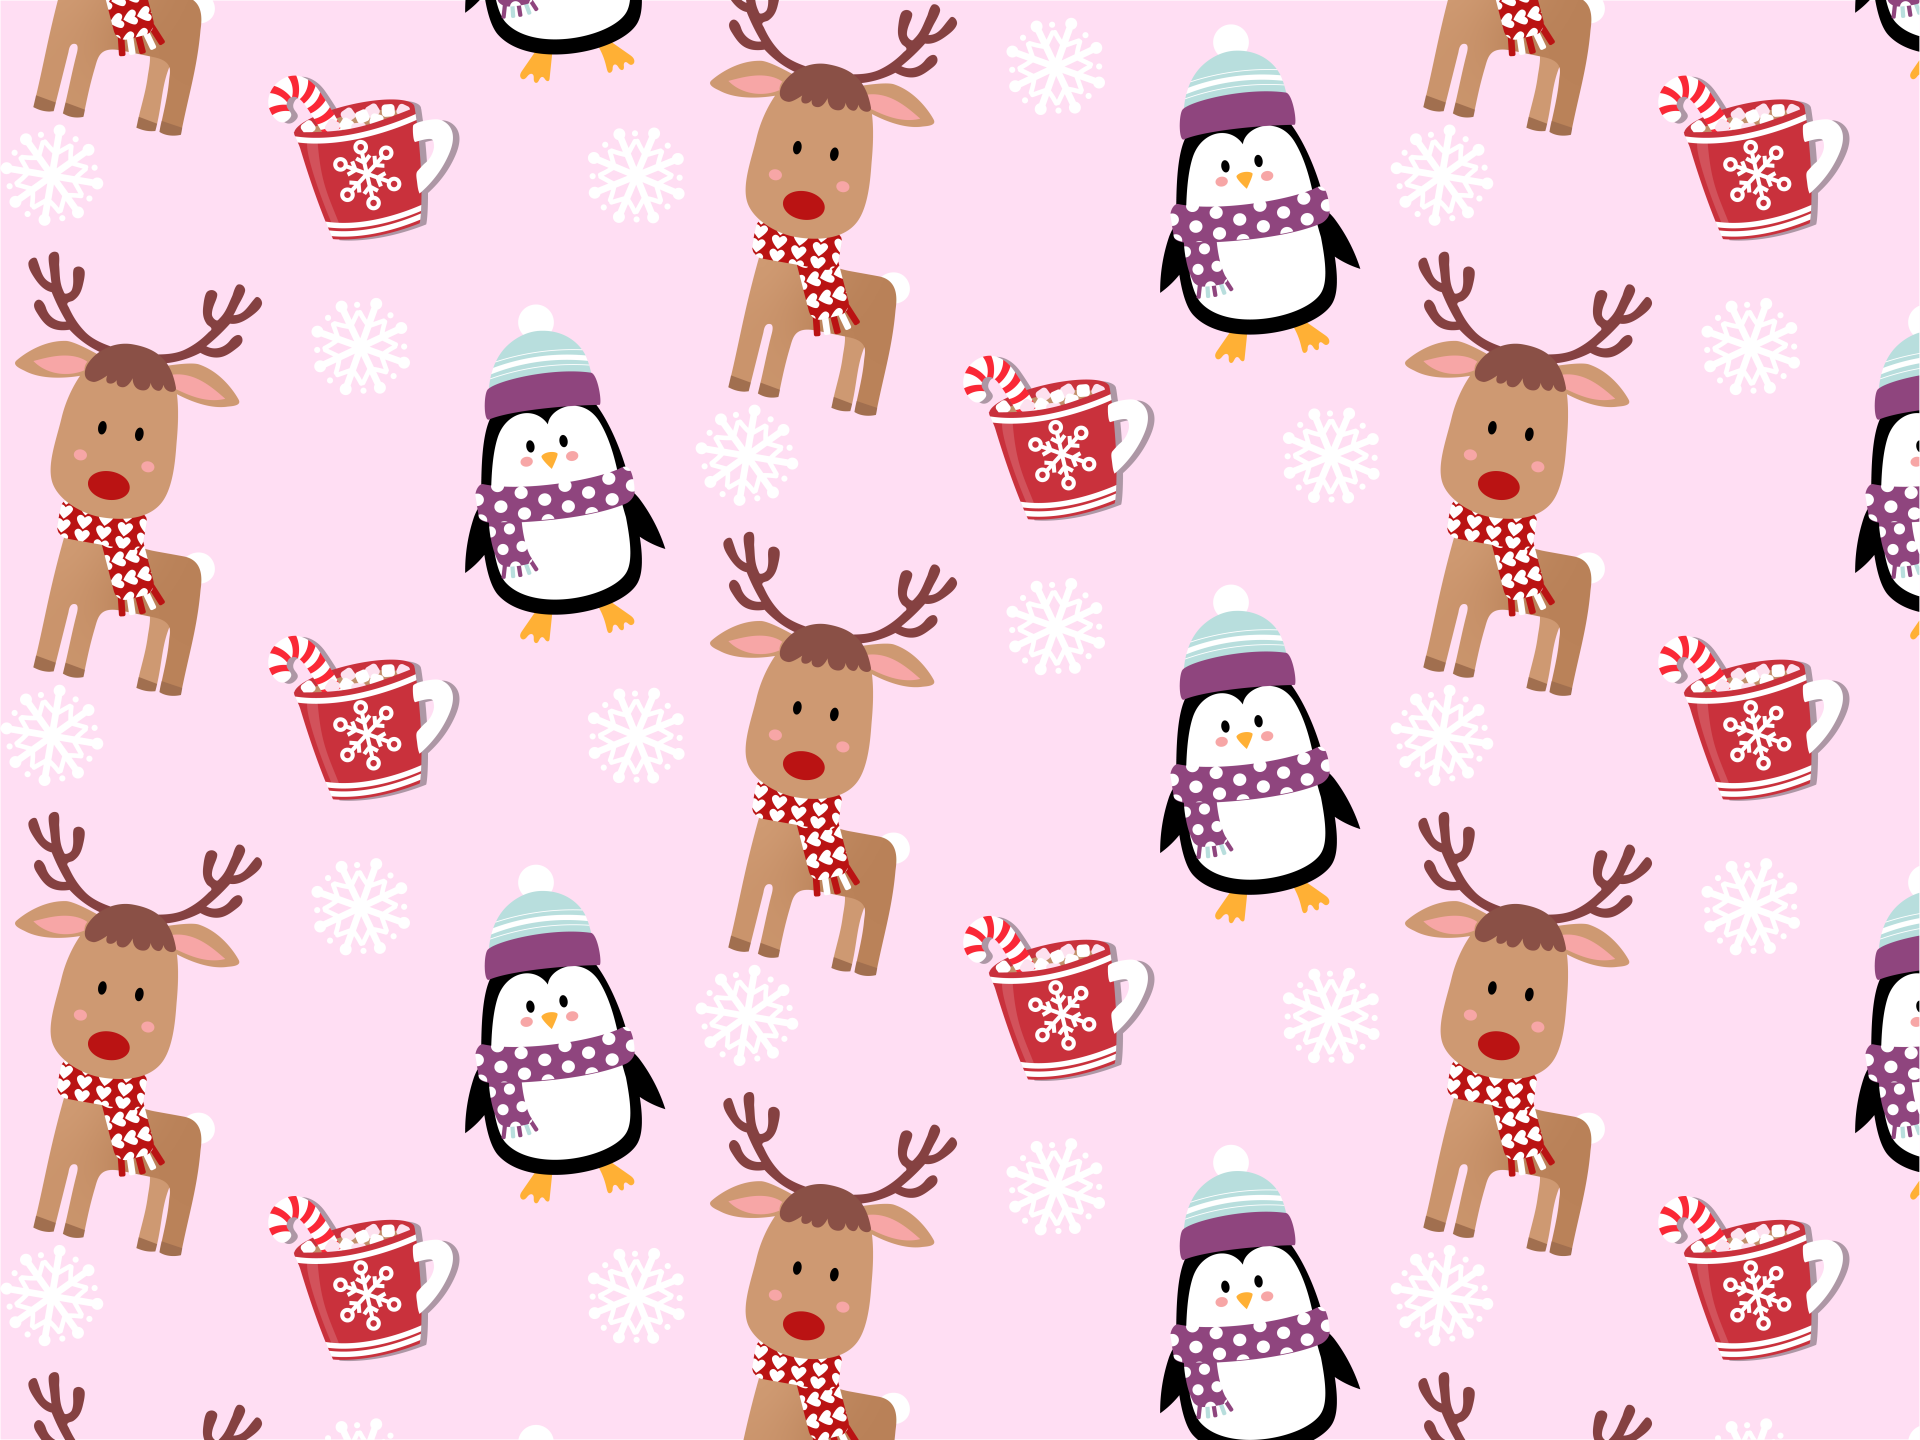 Penguins And Reindeer Wallpaper